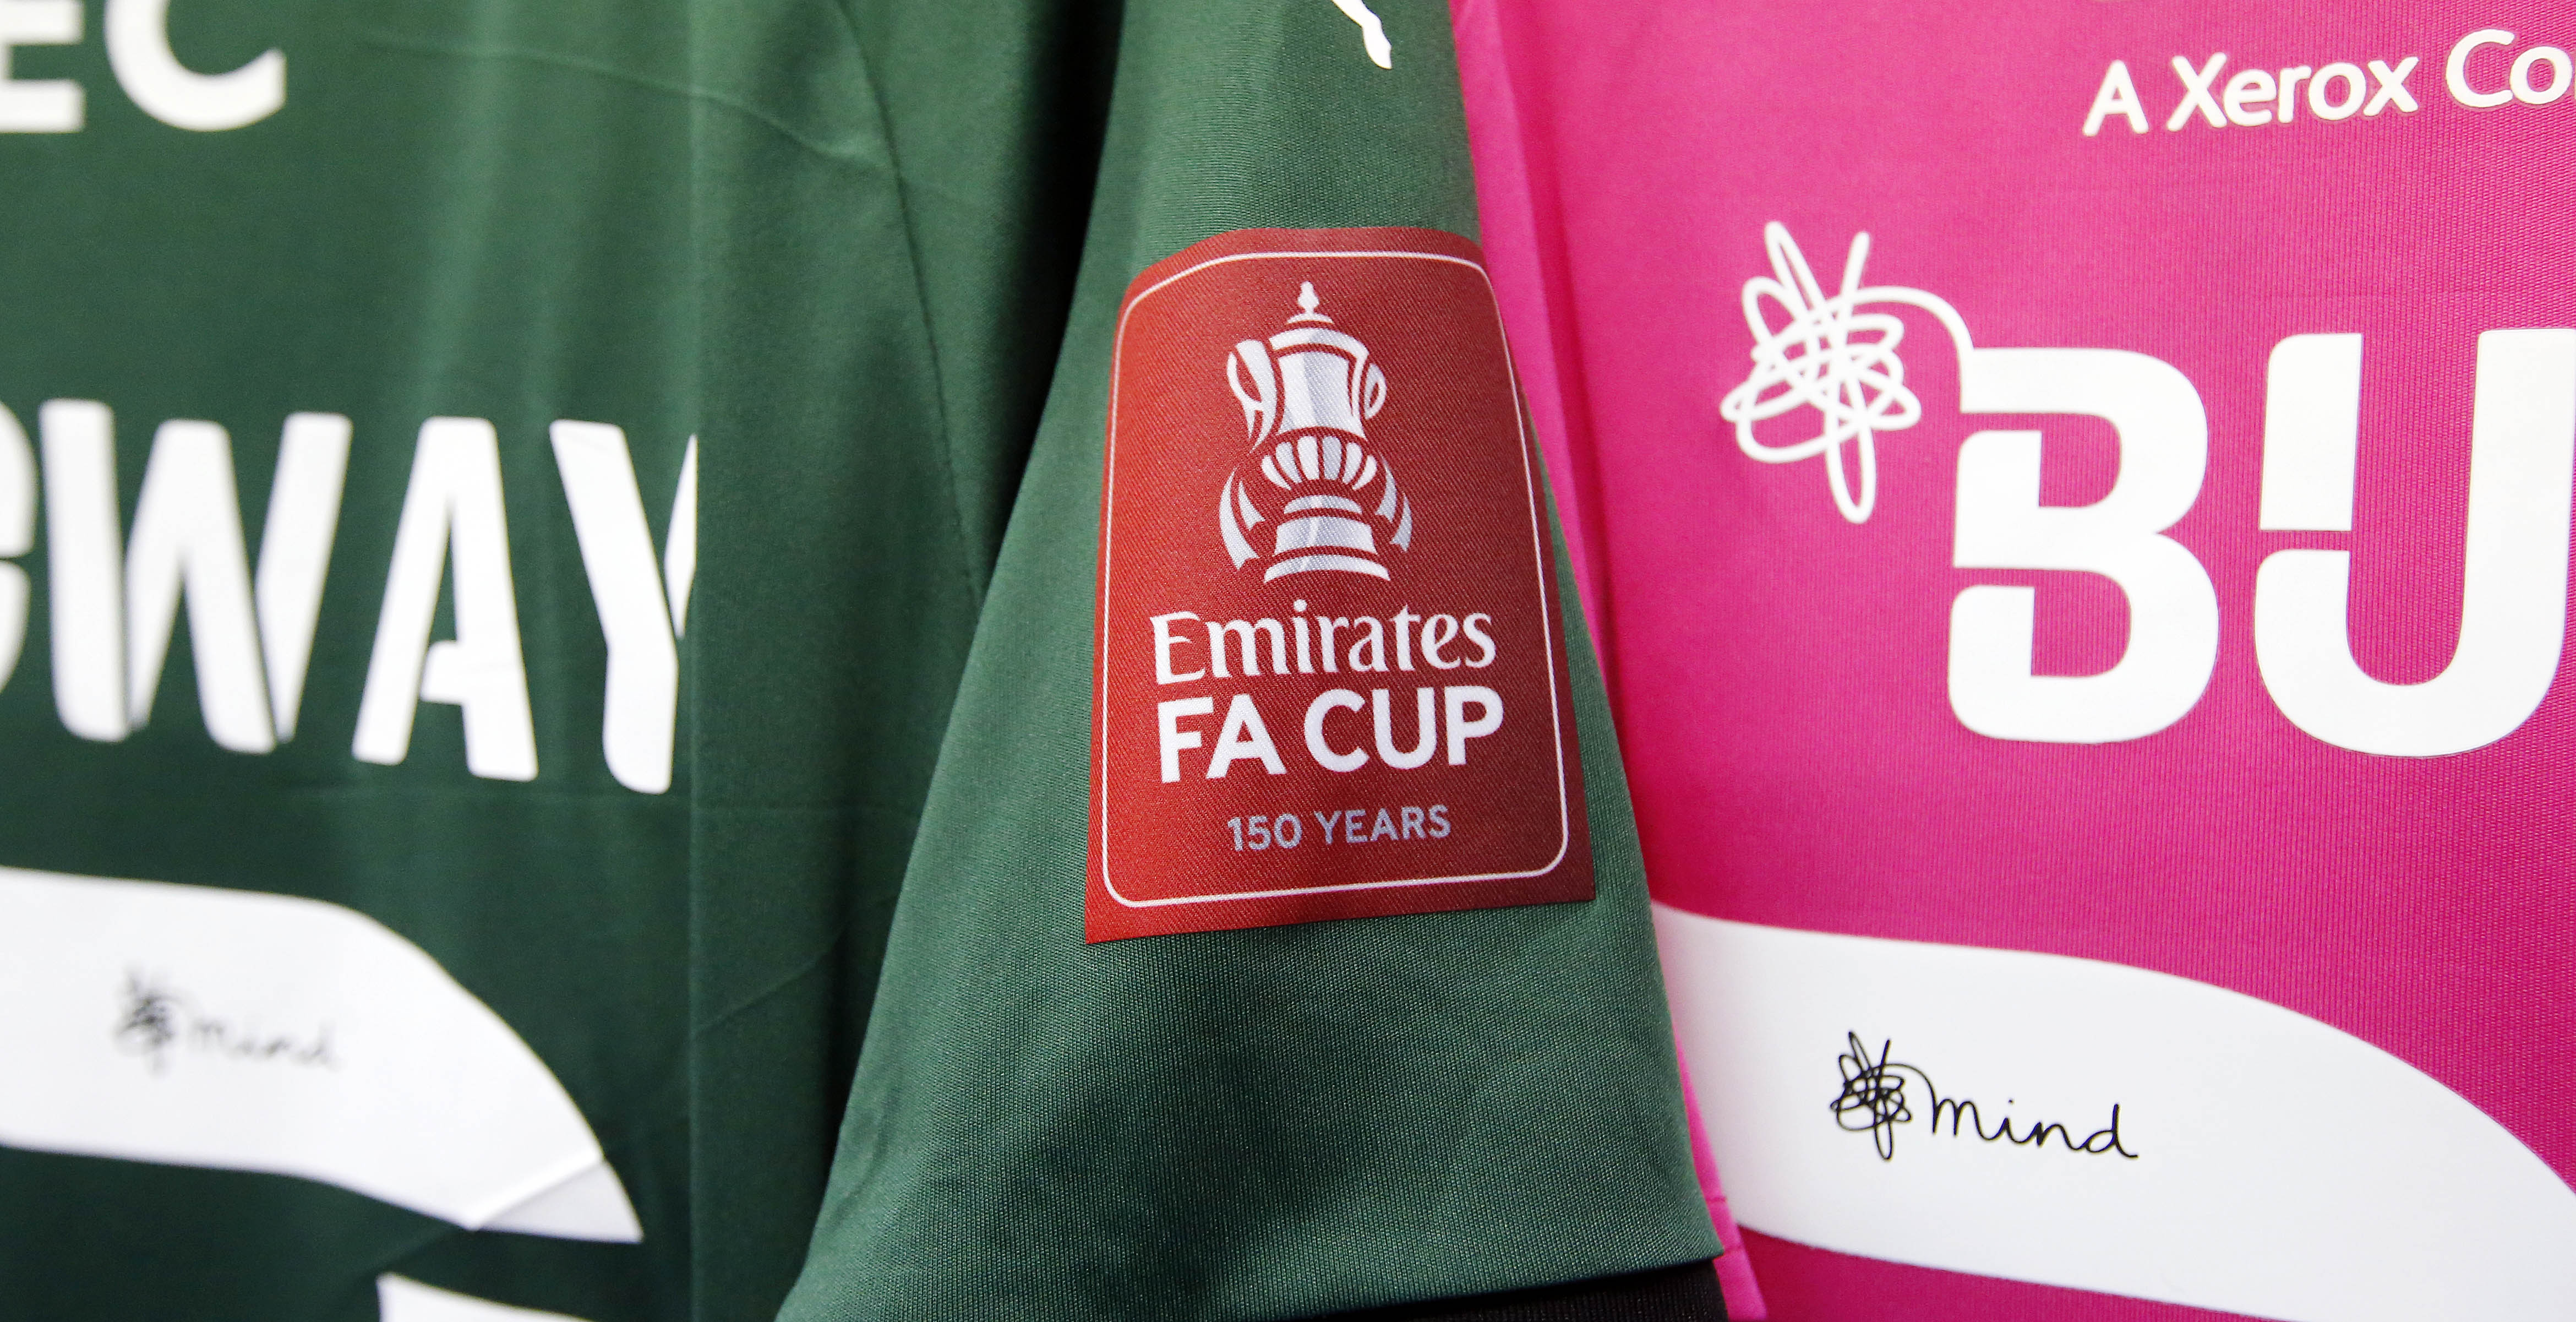 Emirates FA Cup shirt sleeve